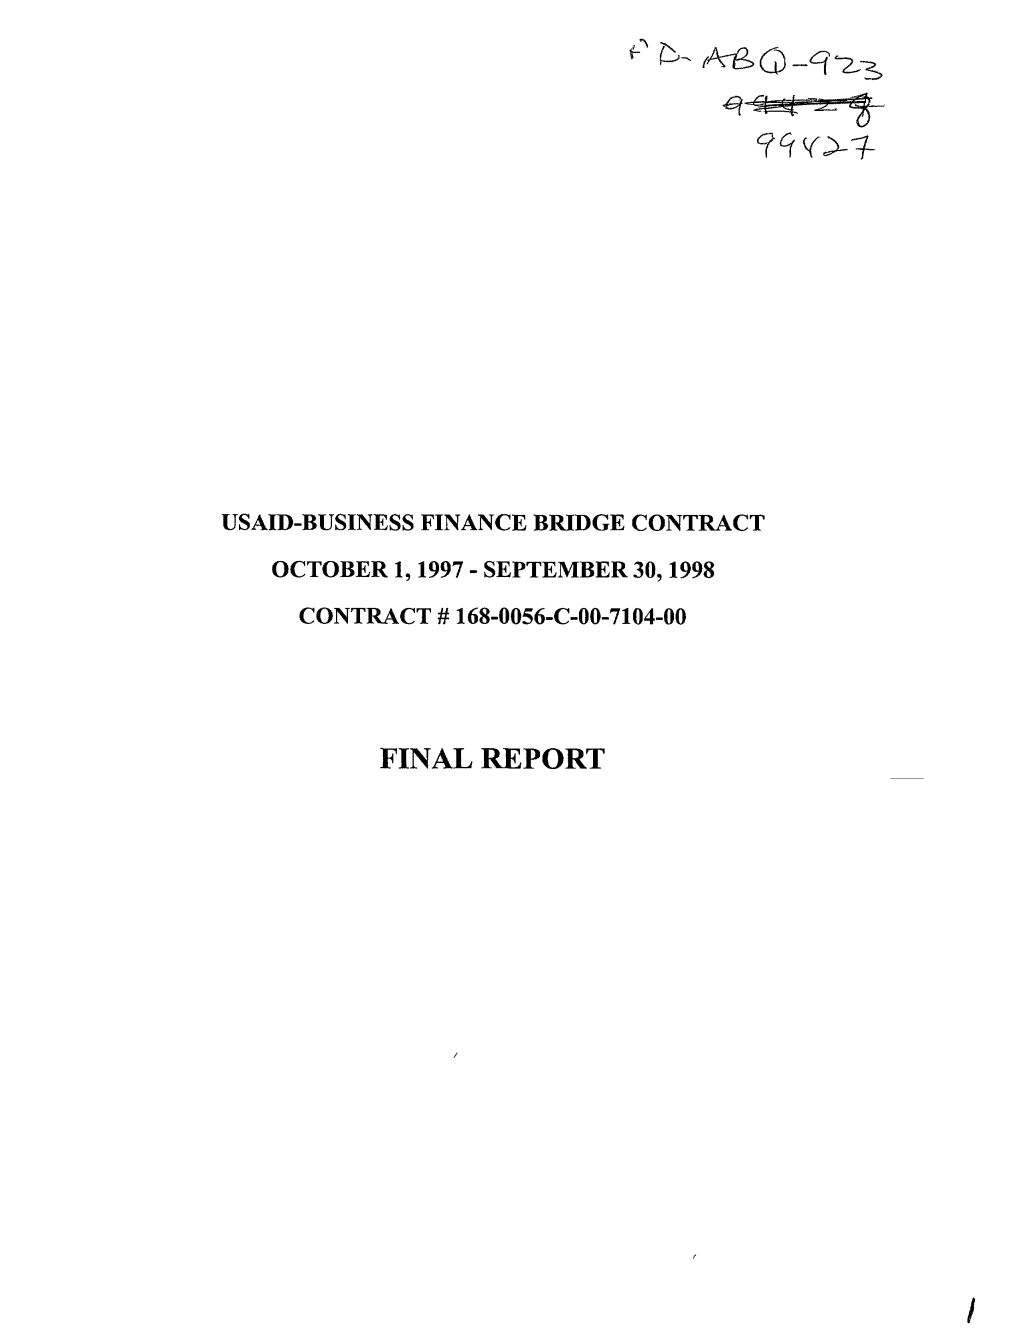 Final Report Usaid-Business Finance Bridge Contract